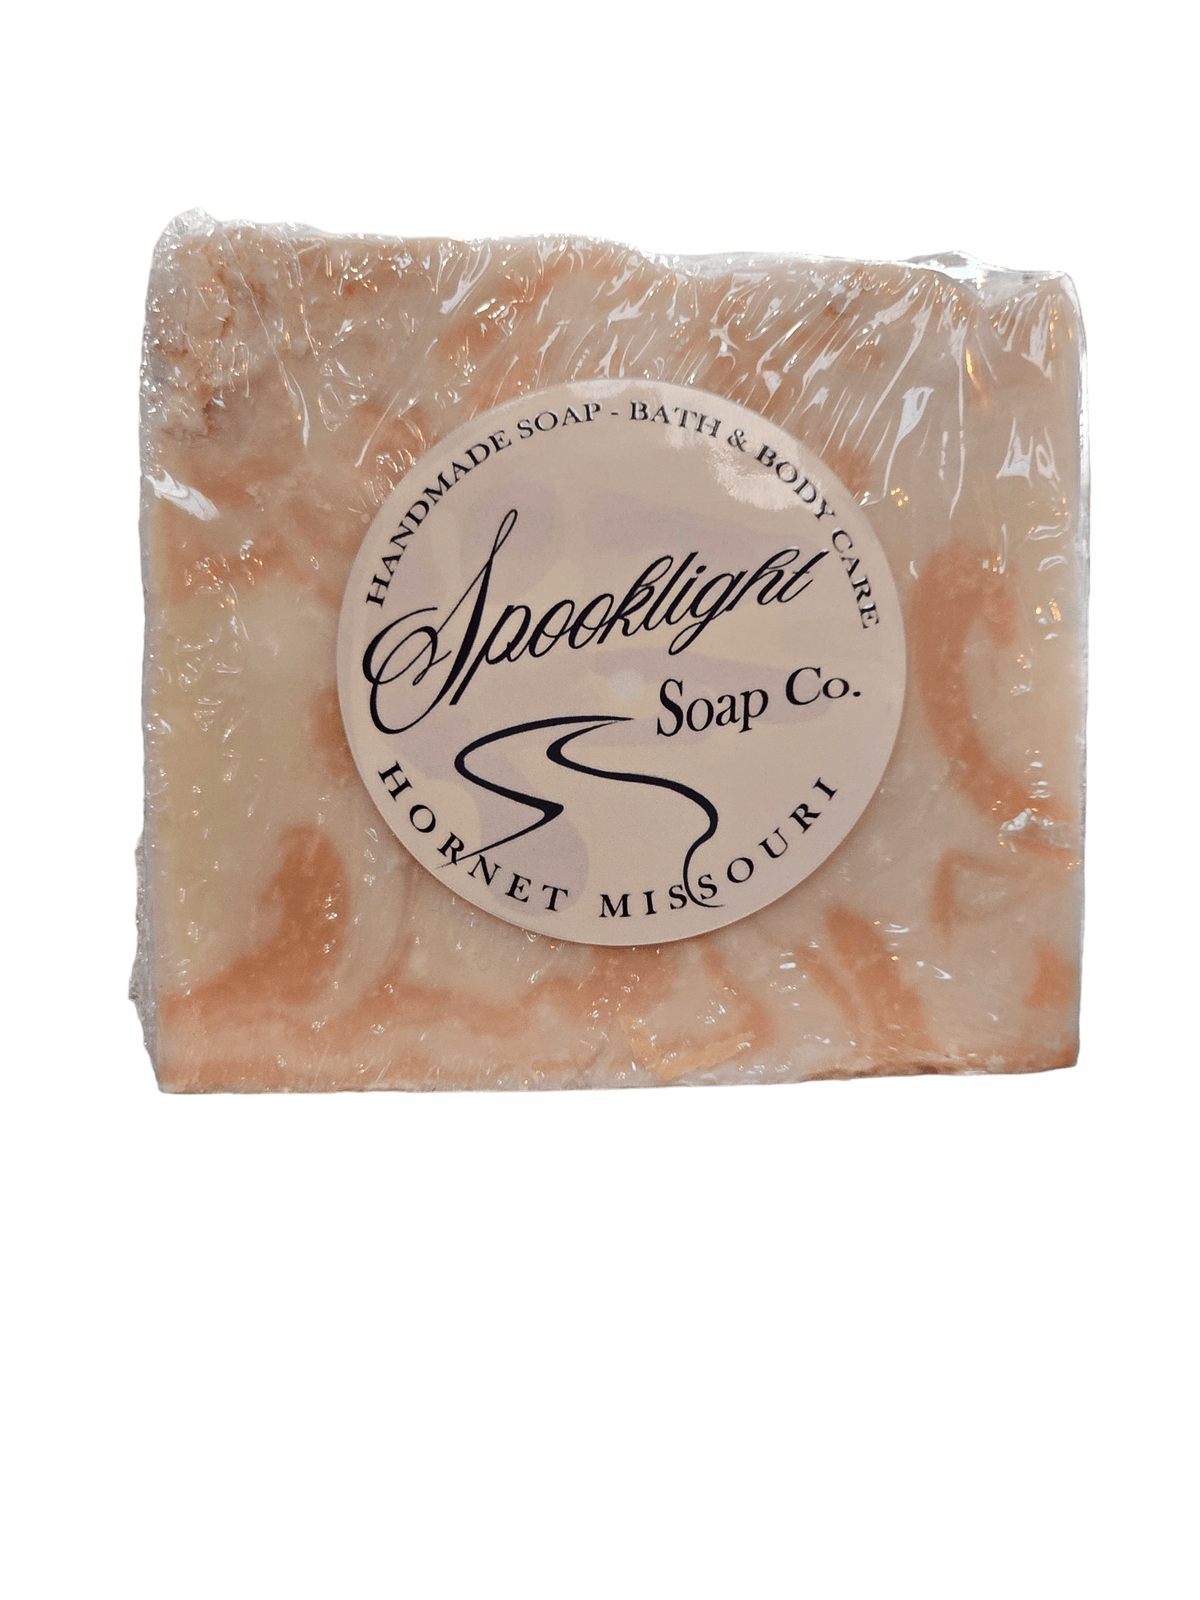 Magnolia Peach Sunrise Soap | Juicy Peach & Floral Notes | Nourishing Coconut Milk Bar by Spooklight Soap Co.